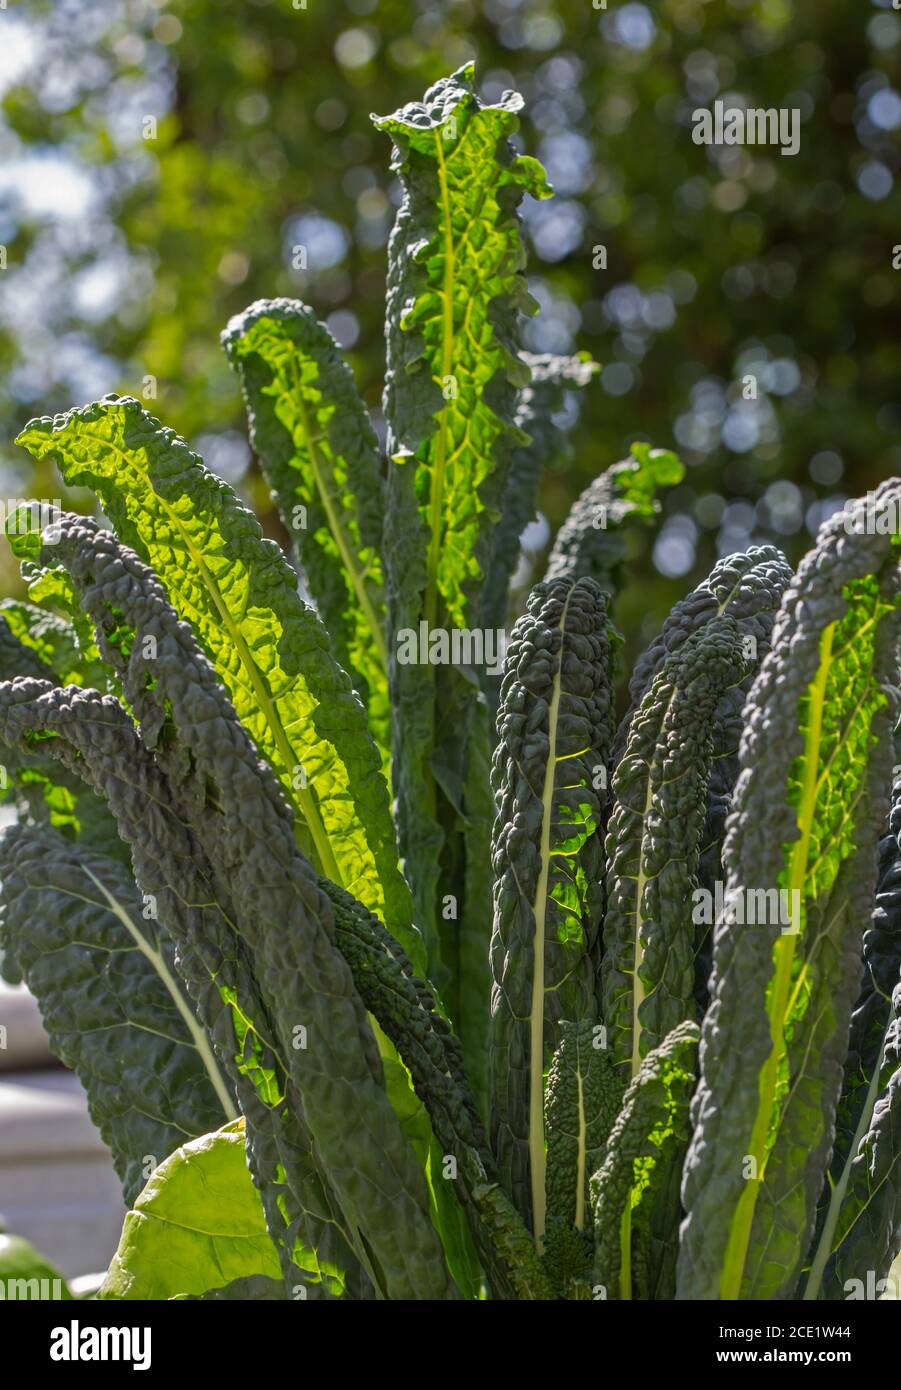 Lacinato kale a popular vegetable Stock Photo